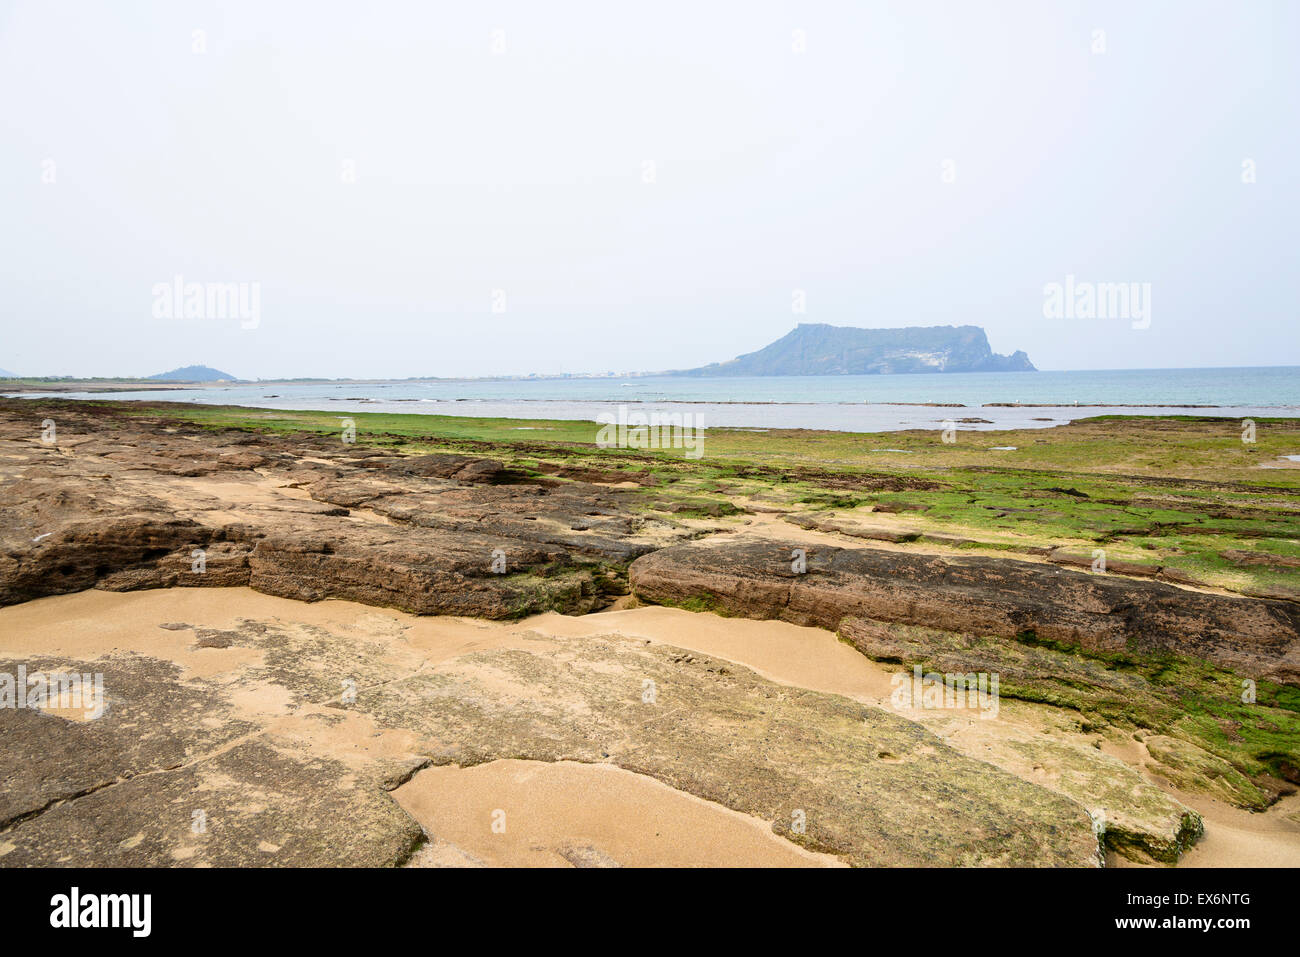 Landscape of Gwangchigi beach with Seongsan Ilchulbong, view from Olle trail No. 1. Gwangchigi is a unusual rocks beach. Stock Photo